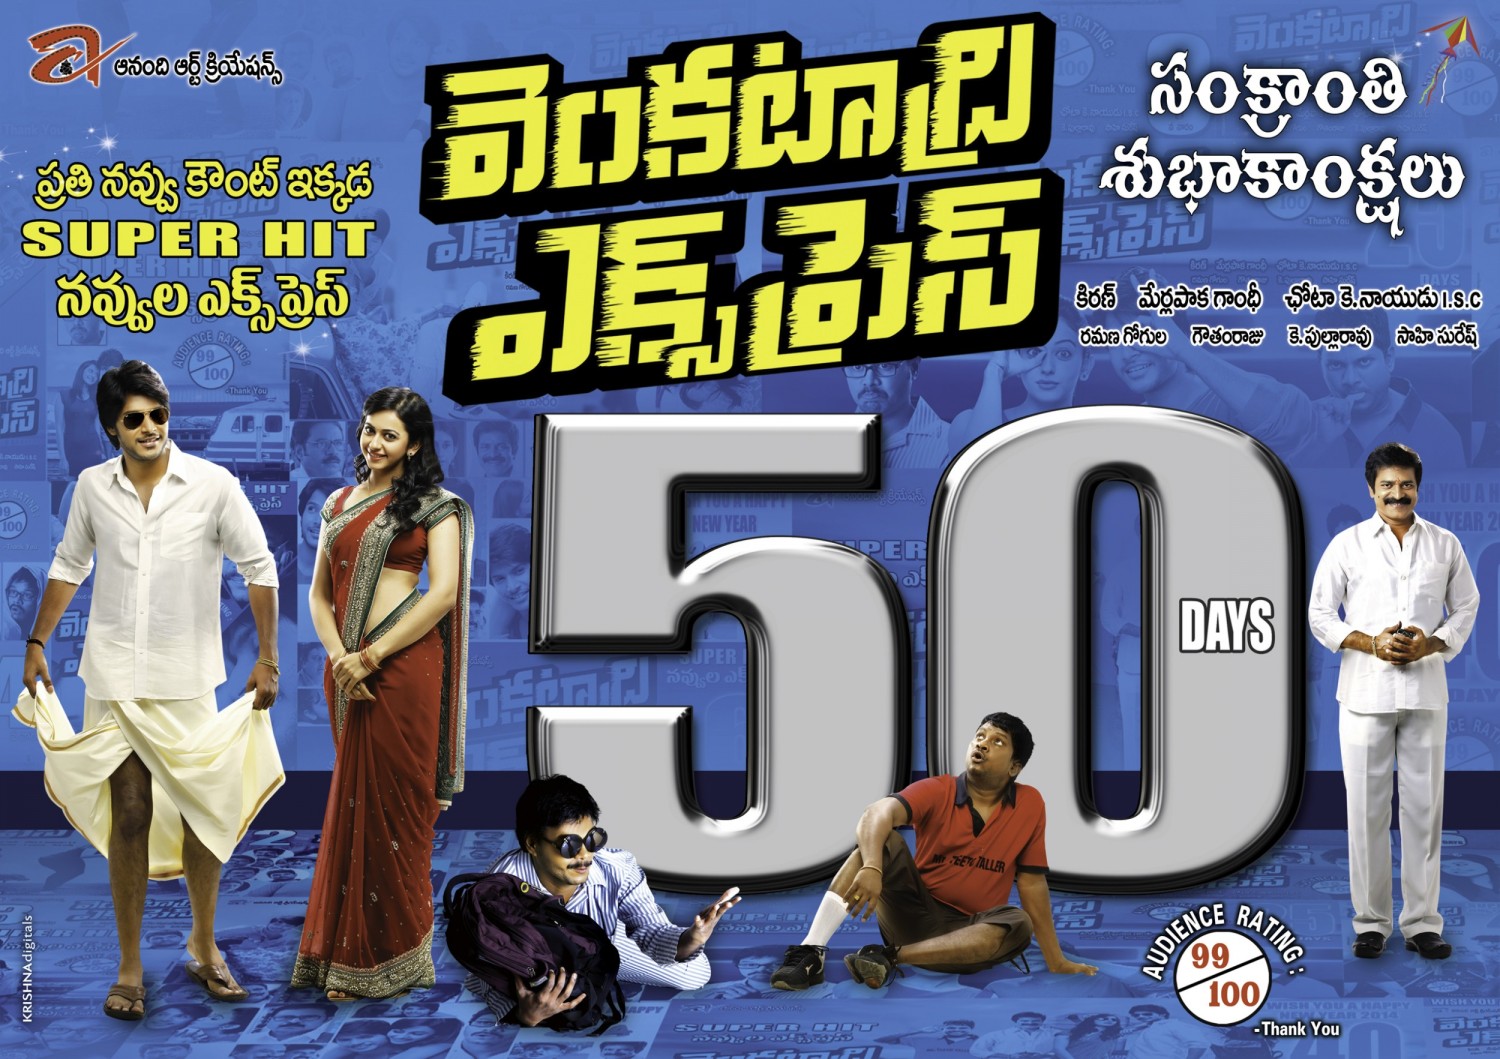 Extra Large Movie Poster Image for Venkatadri Express (#12 of 17)